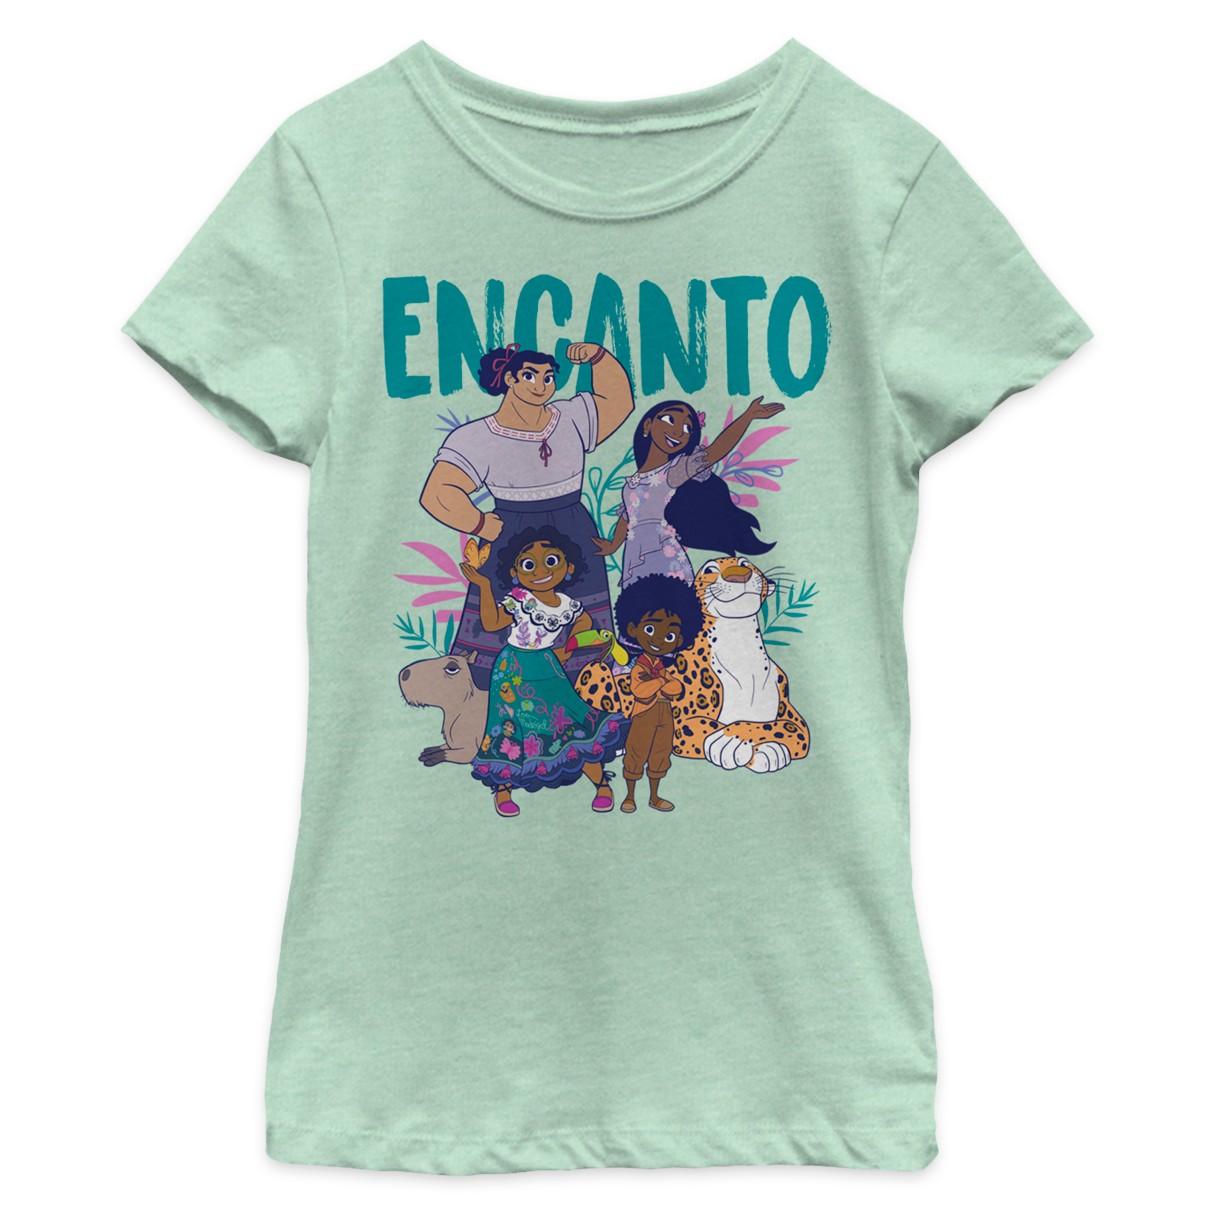 Encanto Cast T-Shirt for Girls | shopDisney